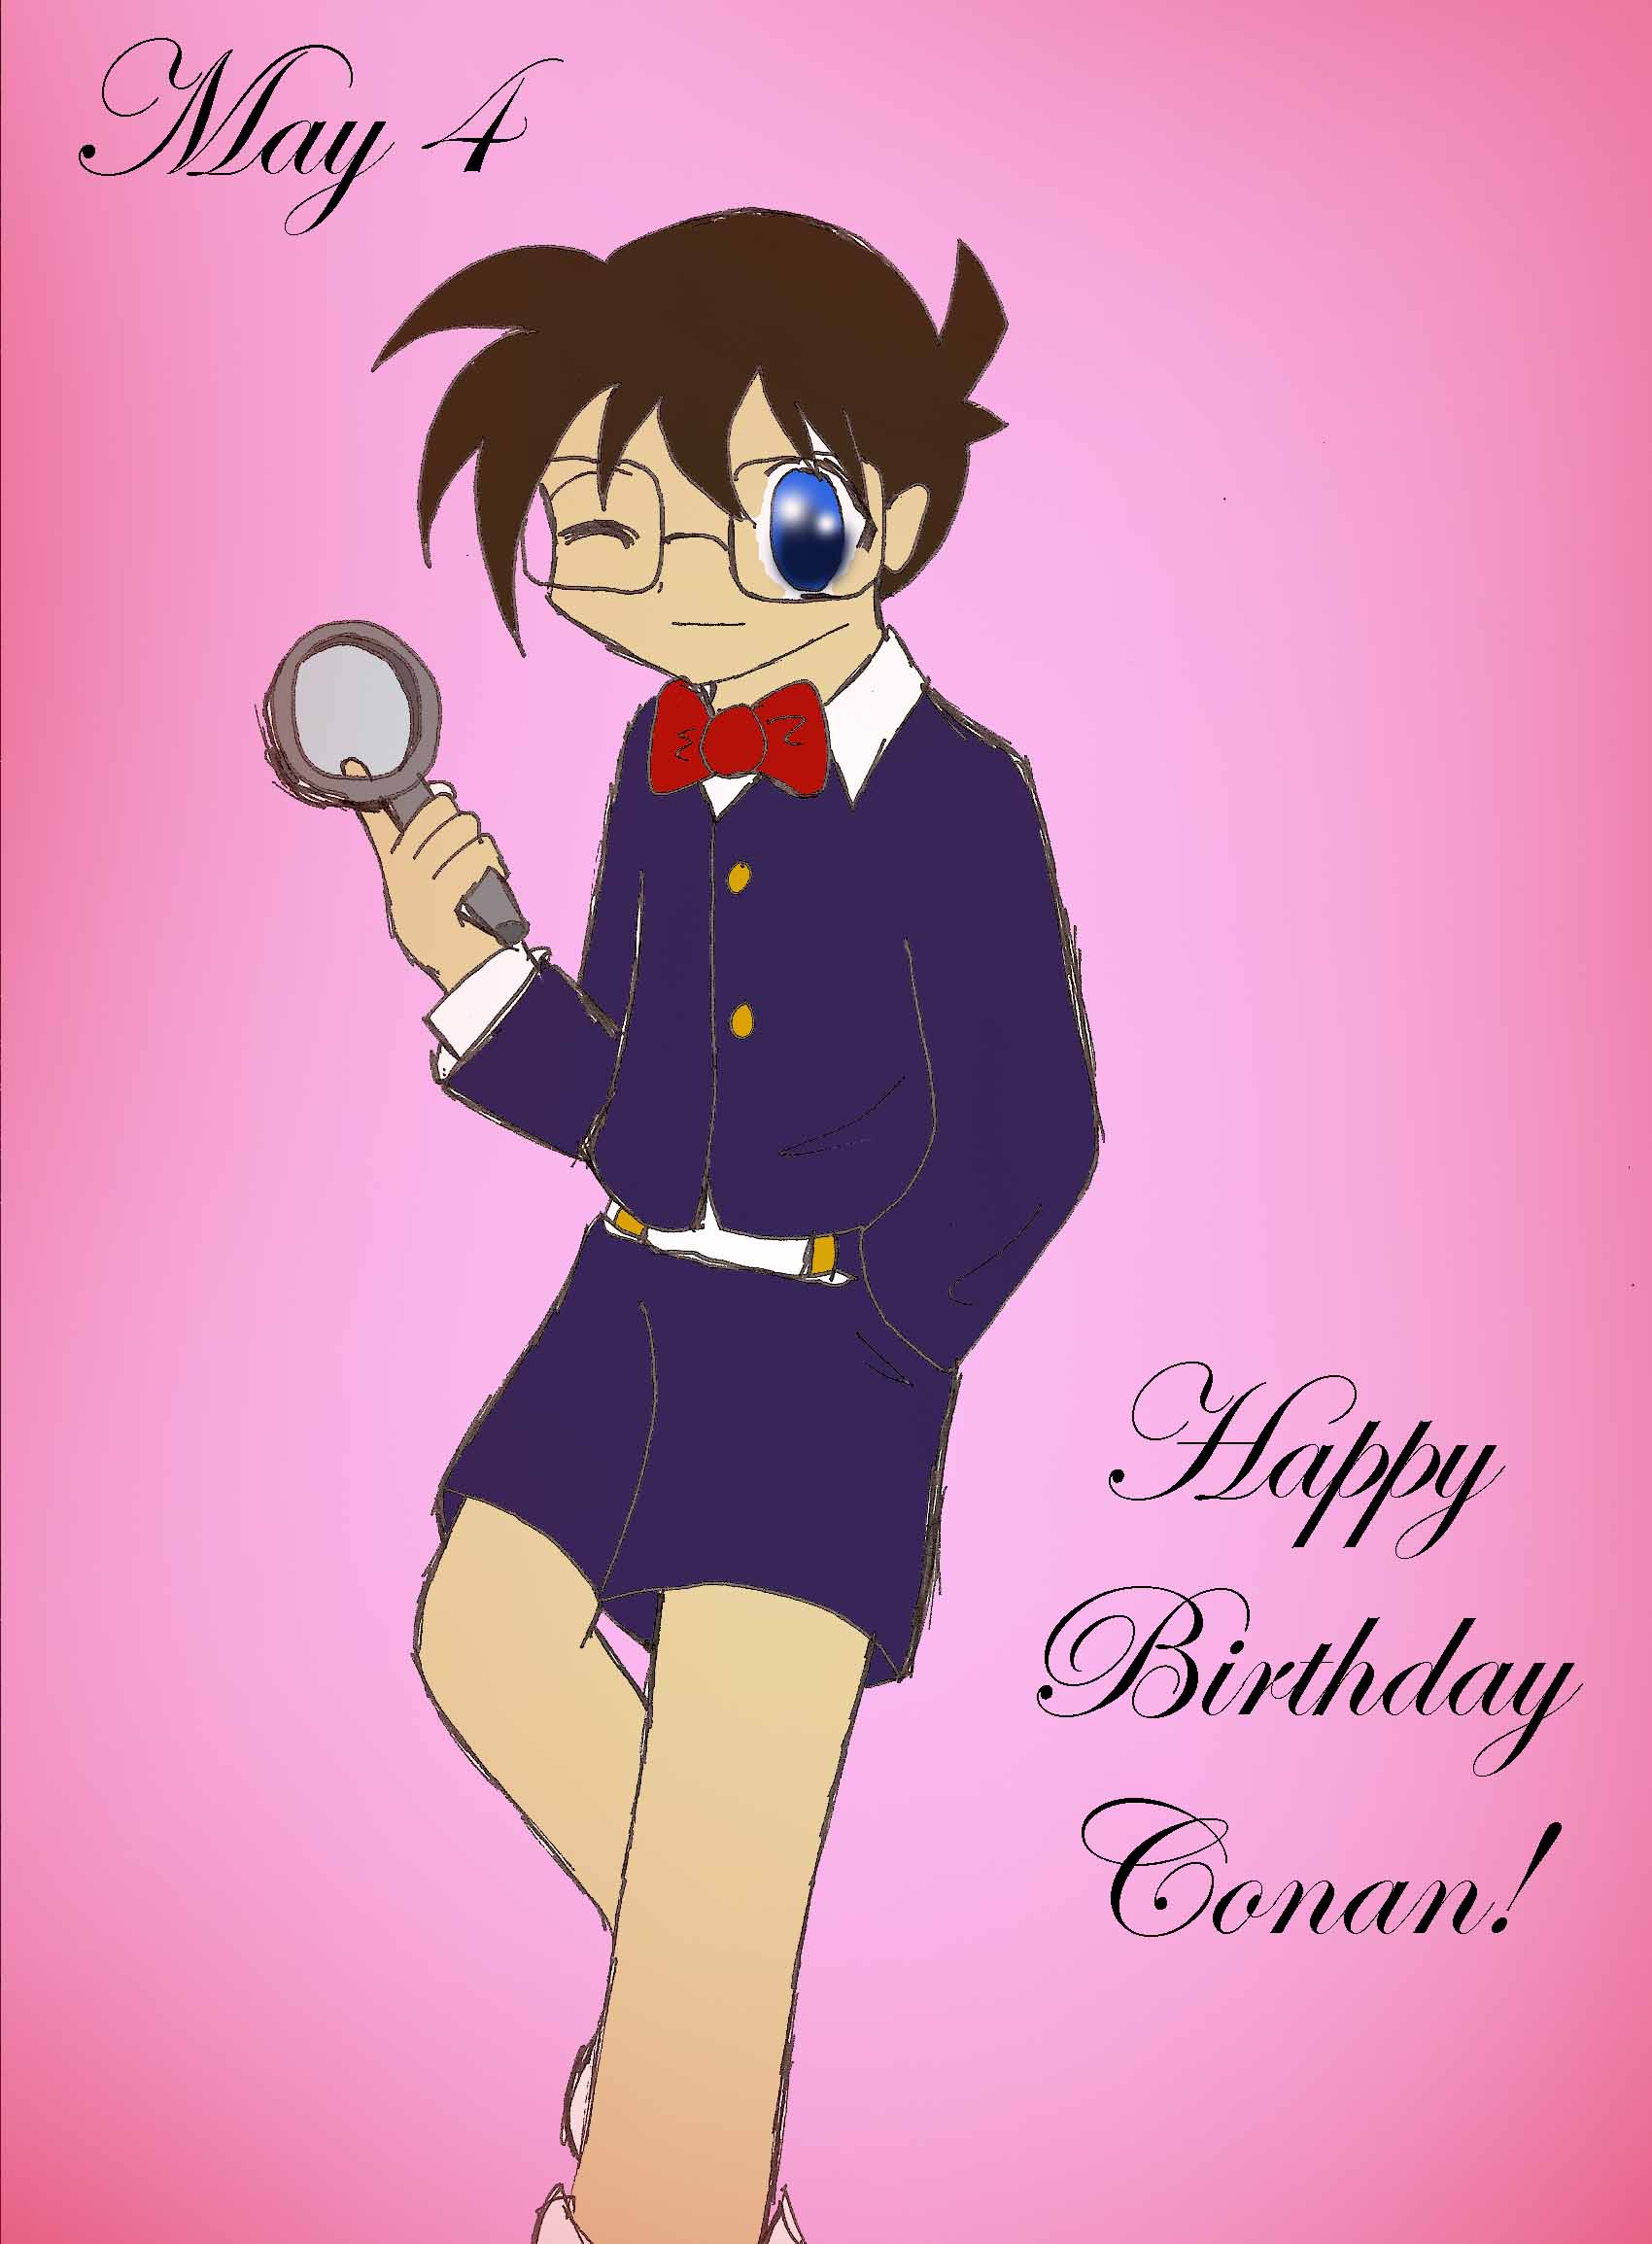 Happy Birthday Conan! by CoStanleyQueen5